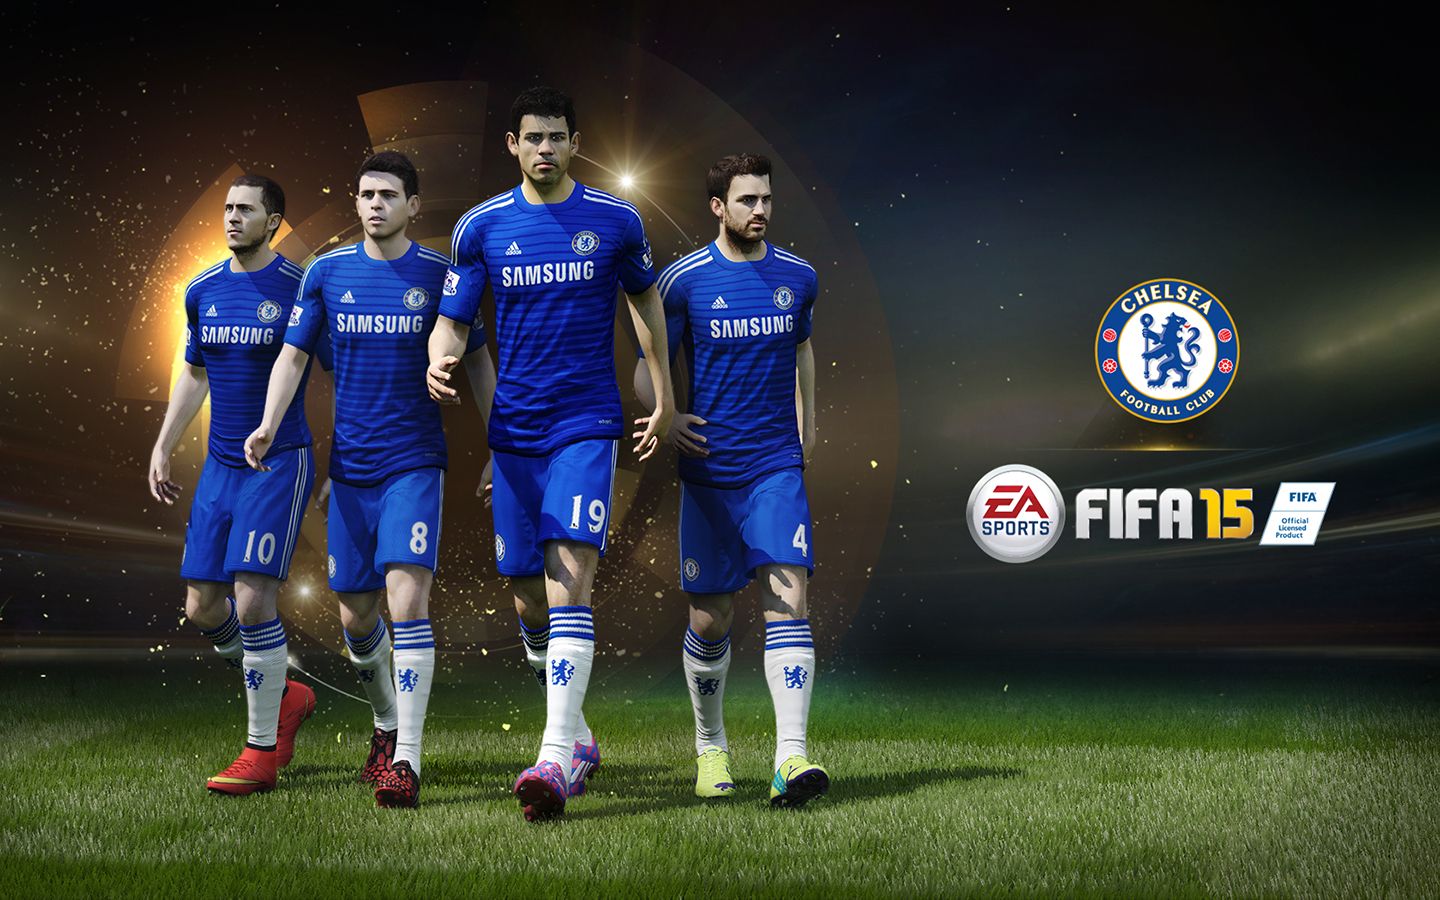 FIFA 15 - Fondos de Chelsea